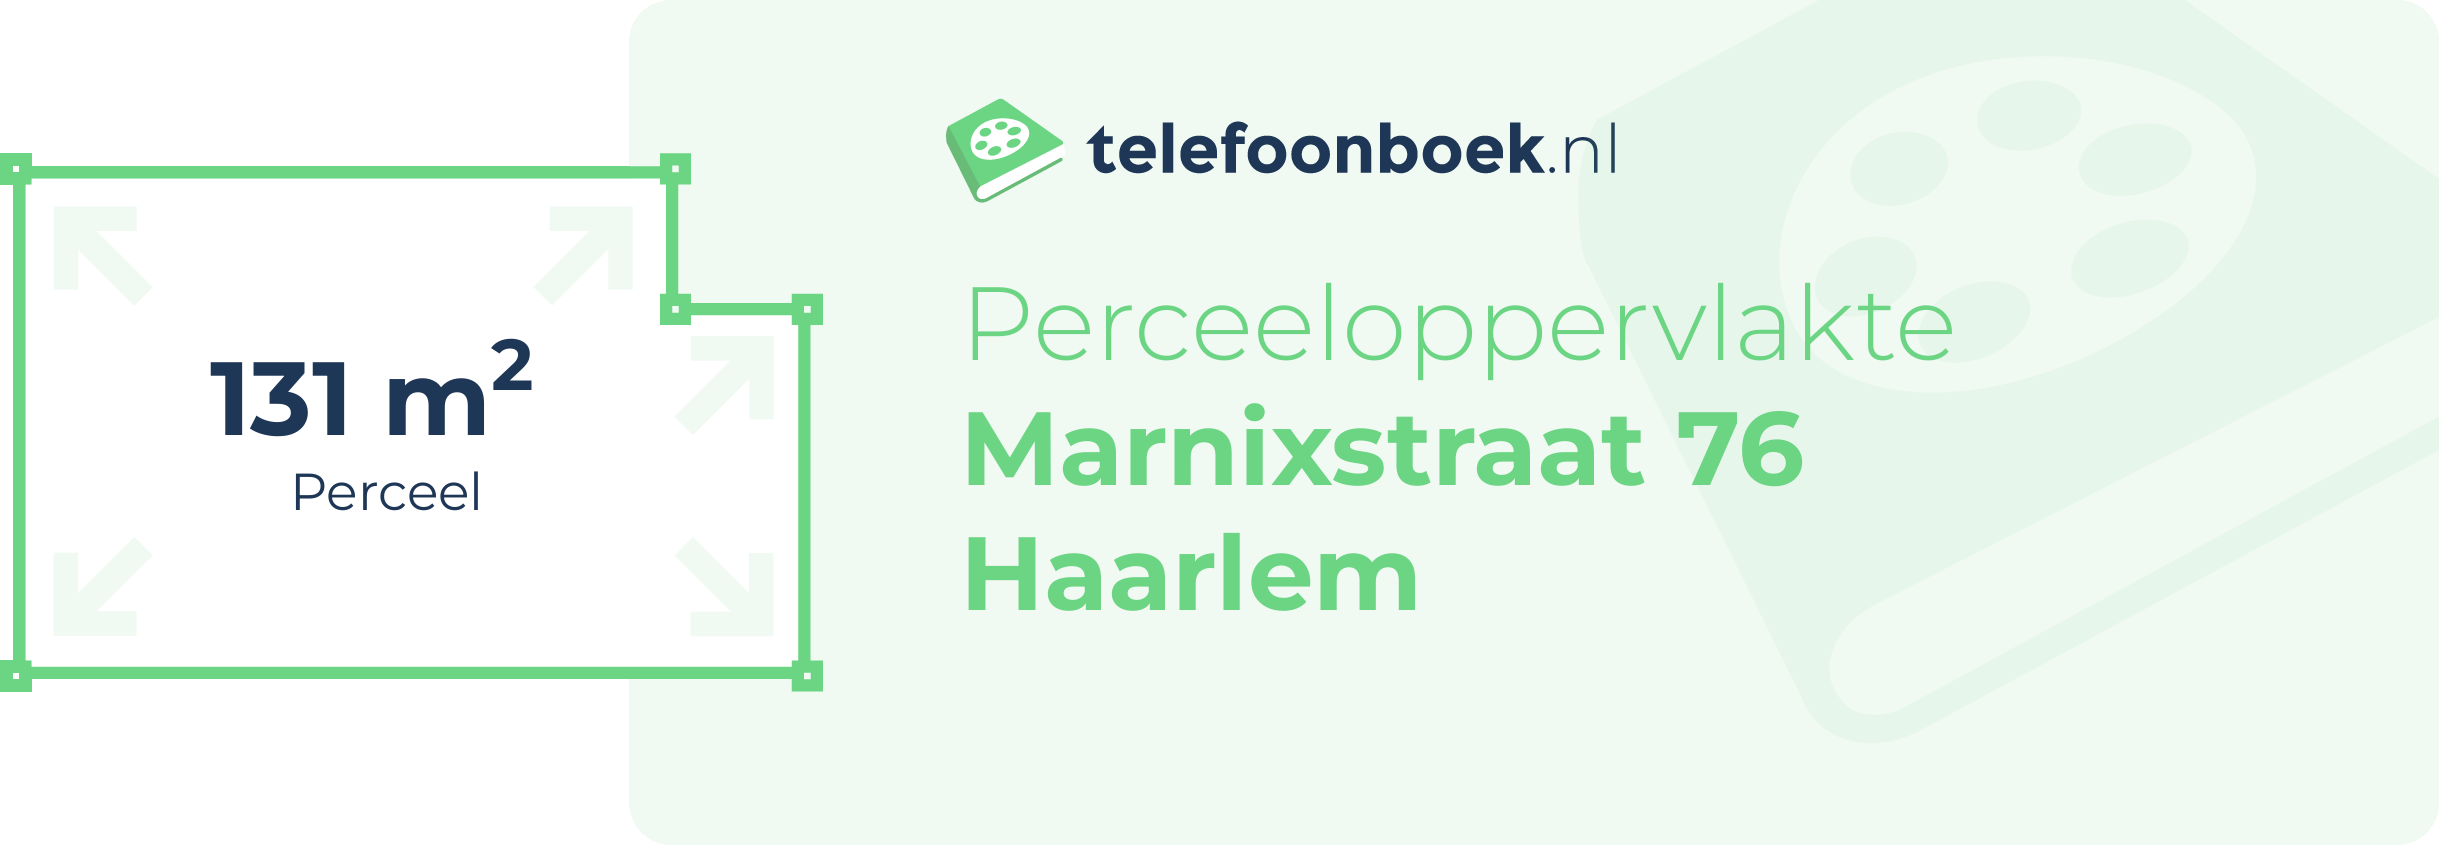 Perceeloppervlakte Marnixstraat 76 Haarlem